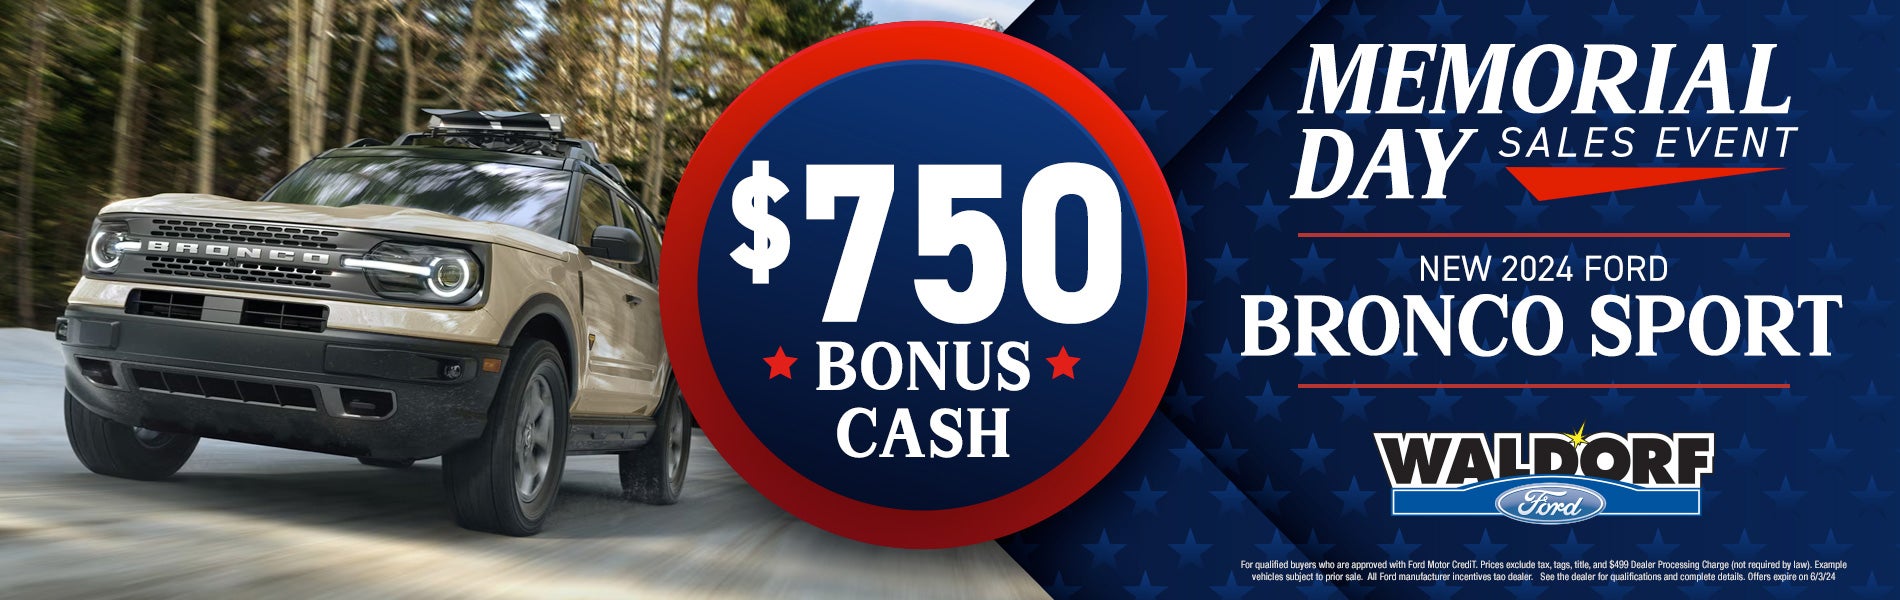 $750 Bonus Cash on Bronco Sport!